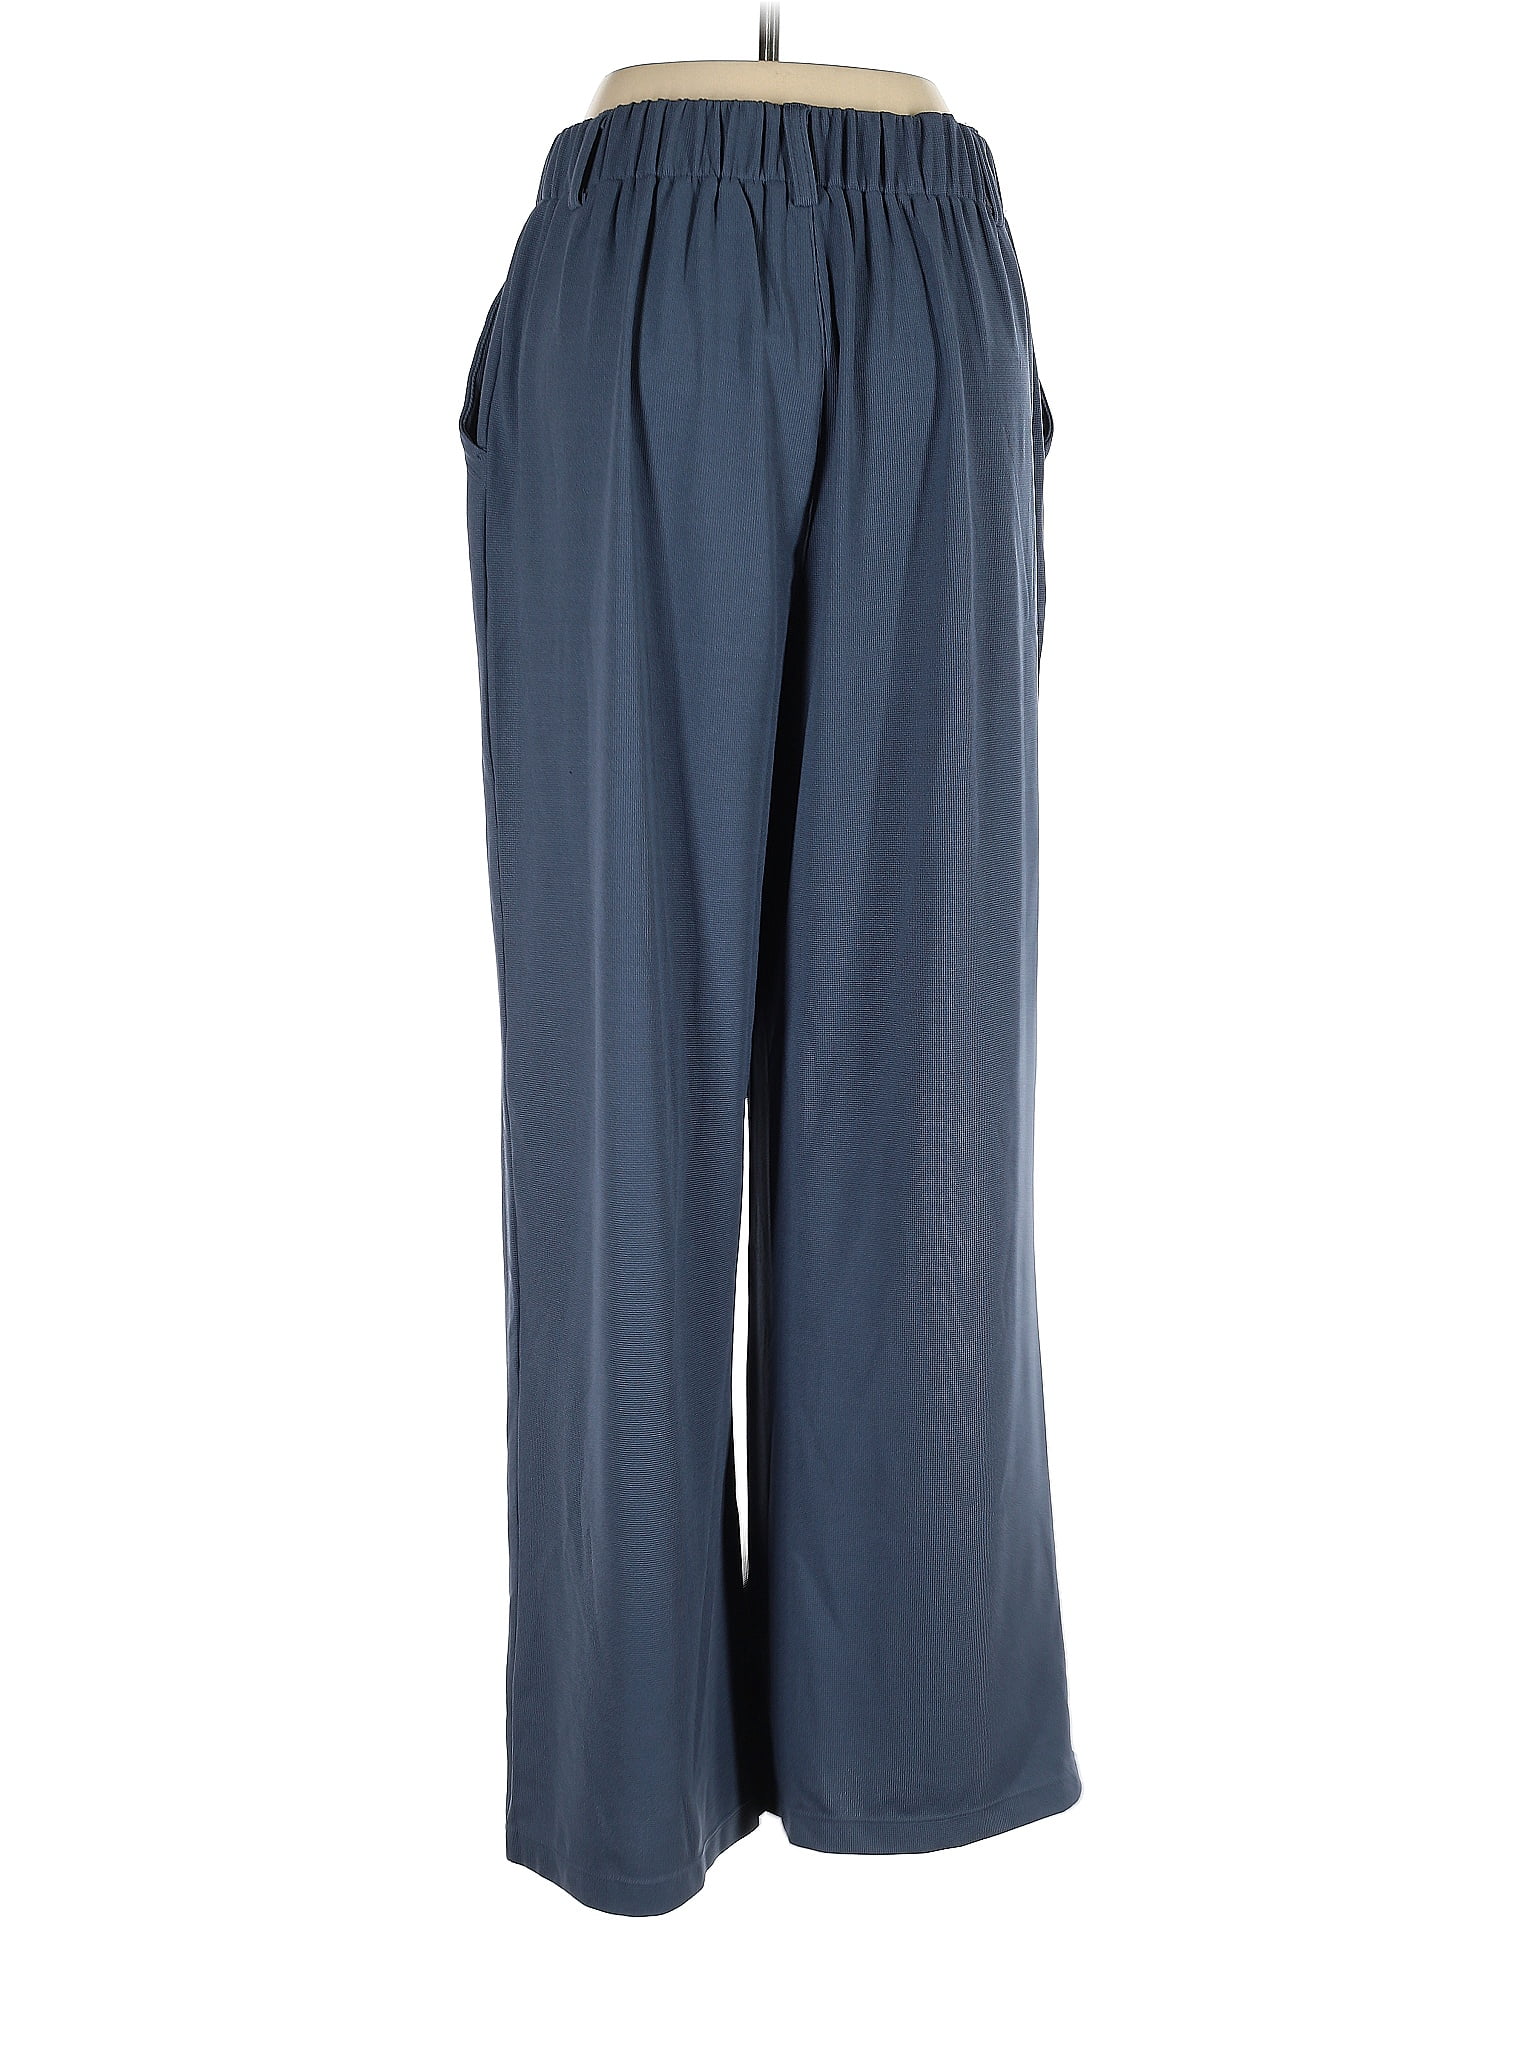 Halara Blue Casual Pants Size M (Petite) - 57% off